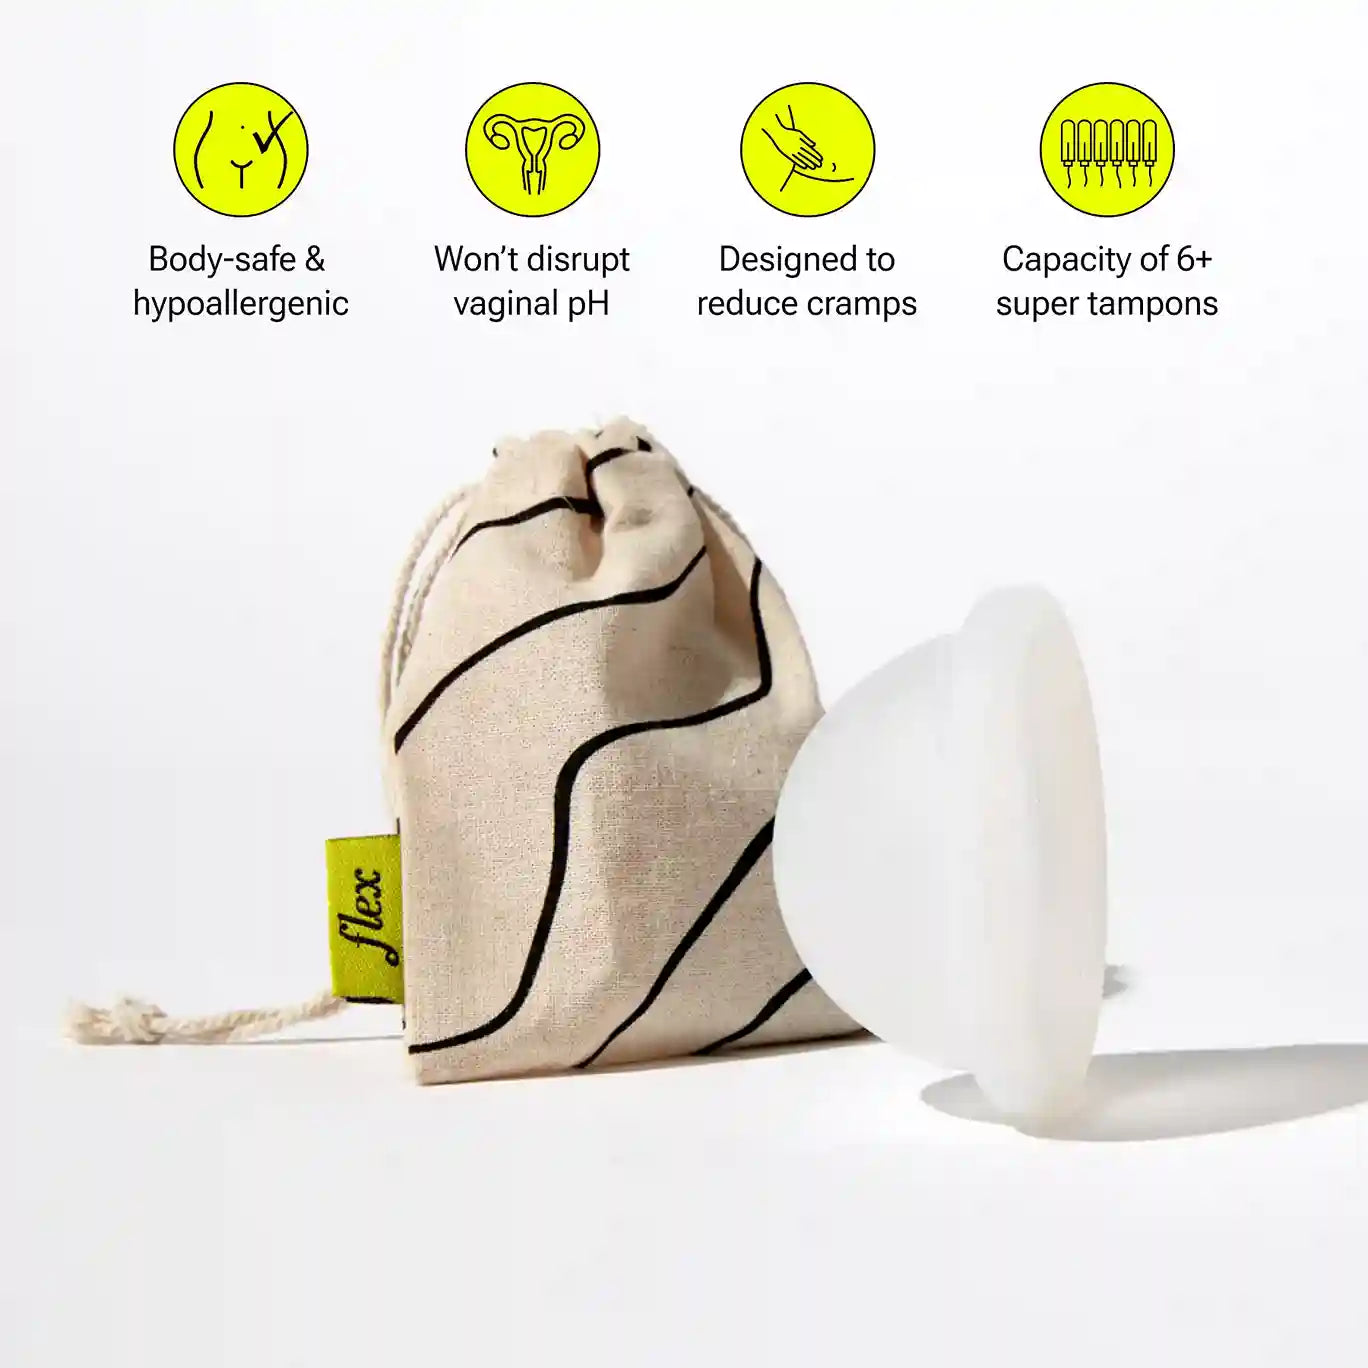 Flex Reusable Menstrual Cup Size 2 with 2 Free Flex Disposable